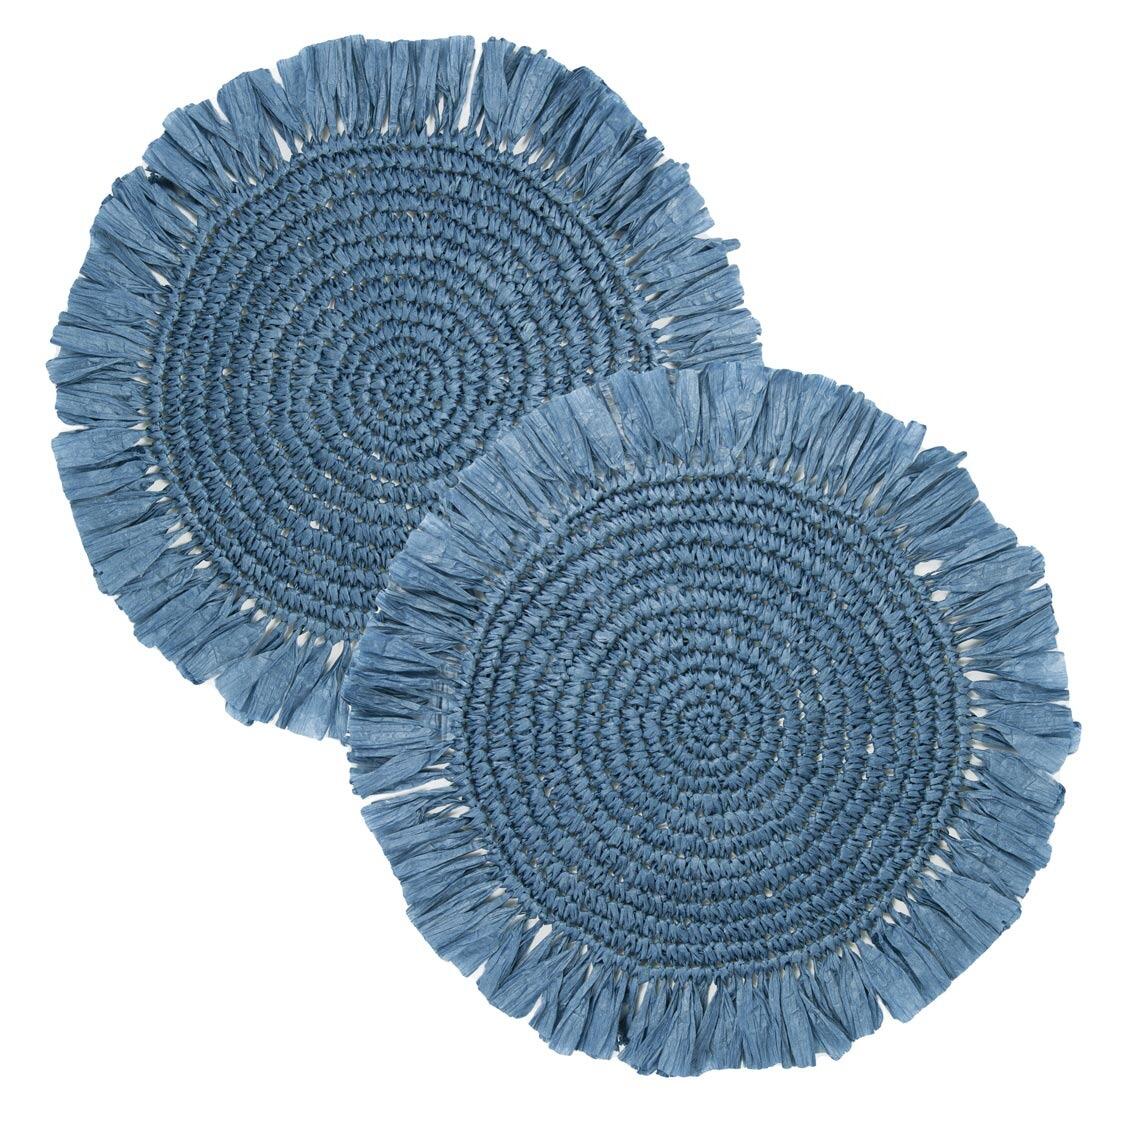 Handmade blue raffia placemats